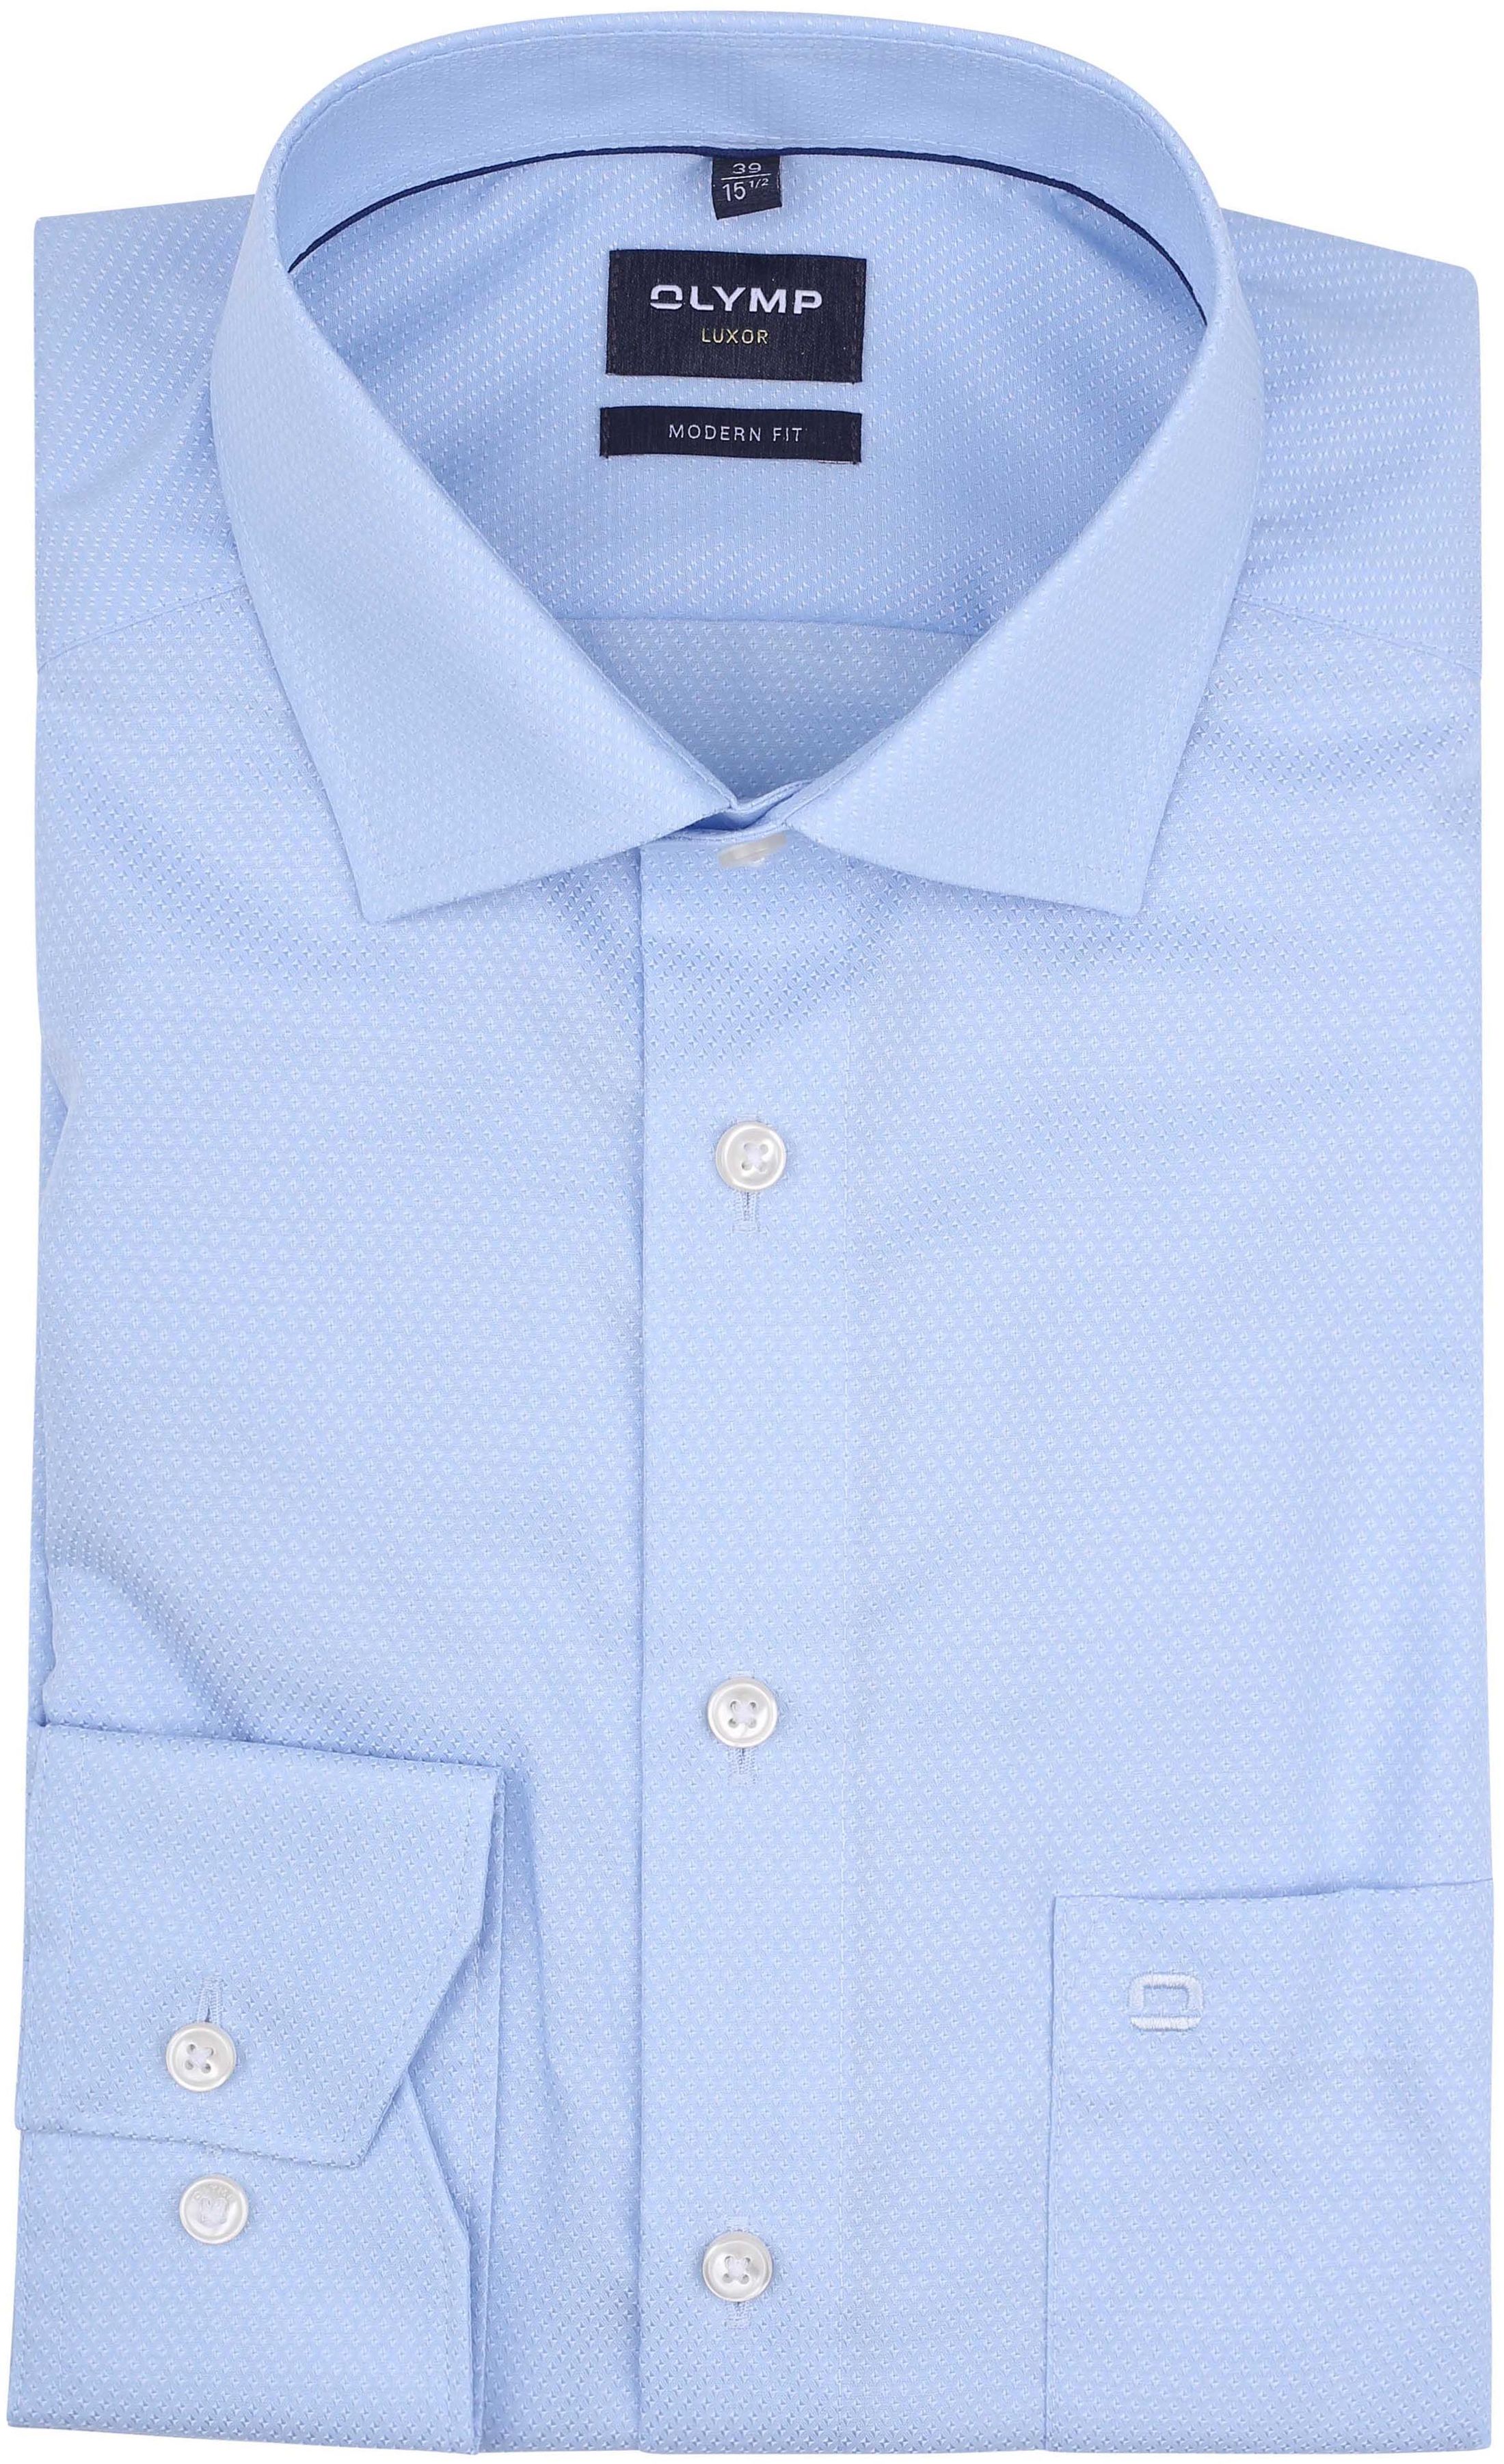 Olymp Luxor Shirt Light Light blue Blue size 48 product